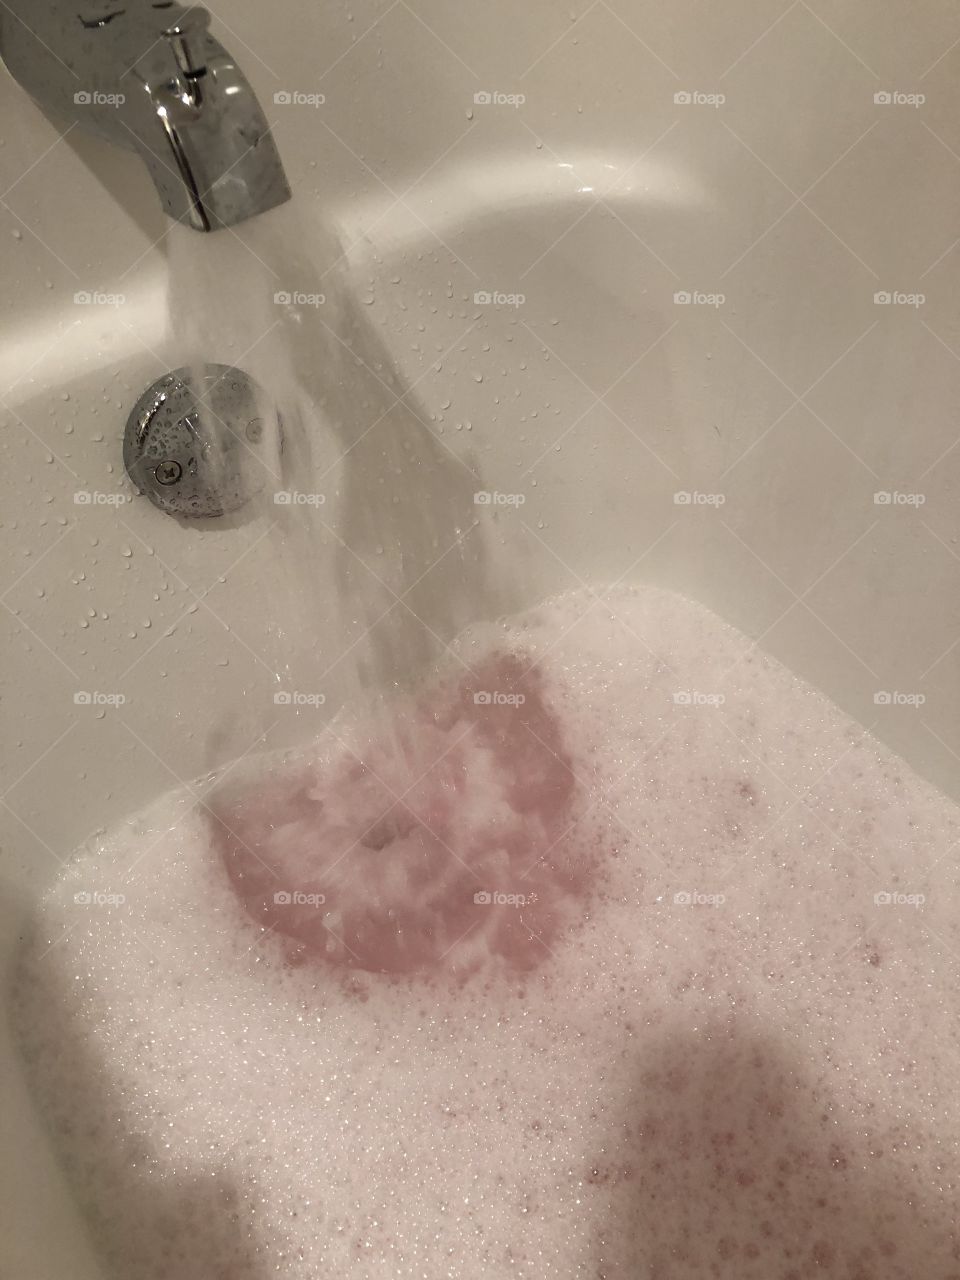 Pink bath